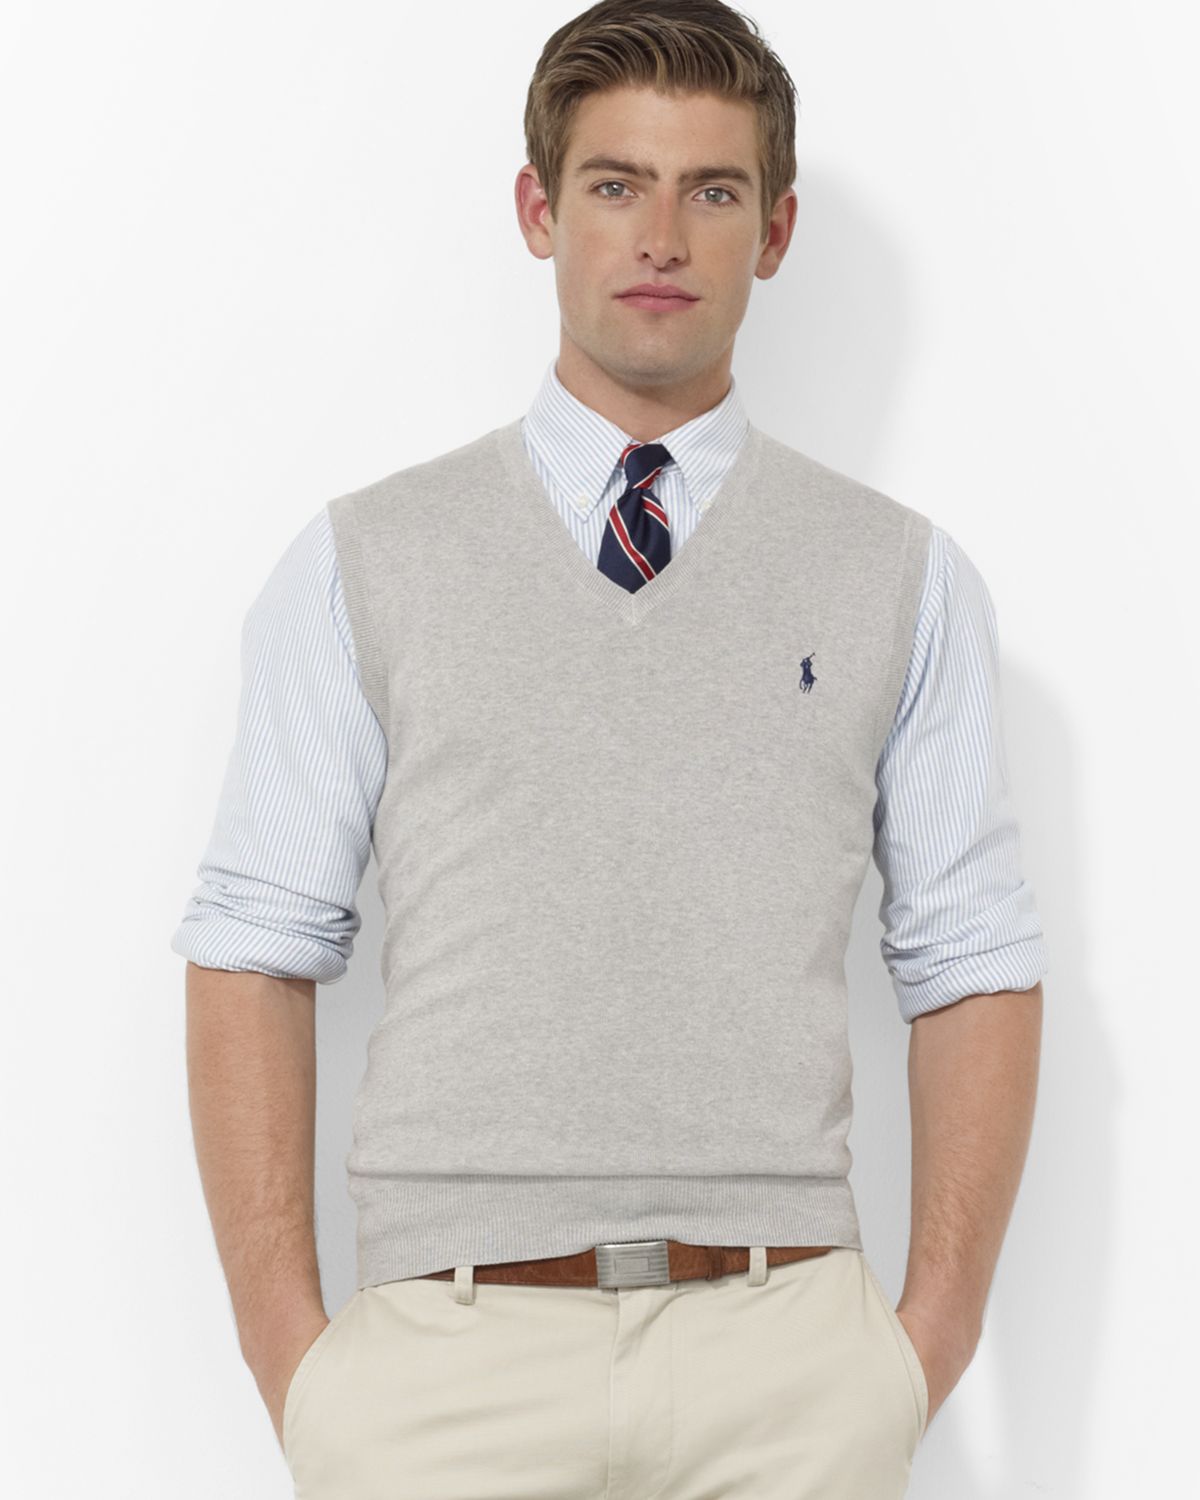 Men sweater sleeveless pullovers vest sweaters white